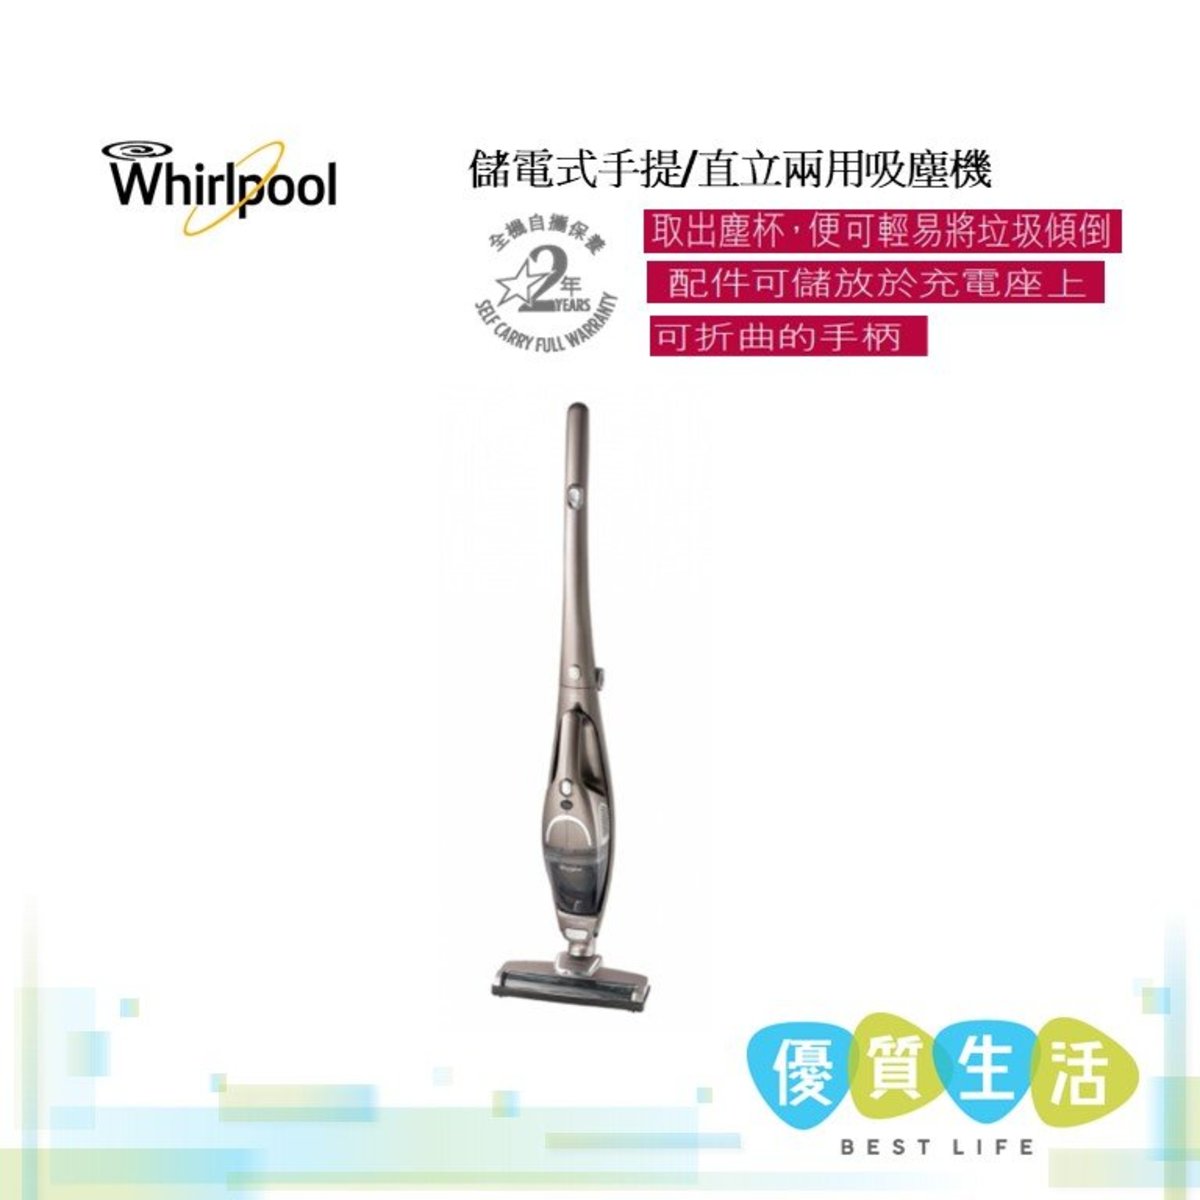 VS1405 - Inspiring 2-in-1 Handheld/ Stick Vacuum Cleaner